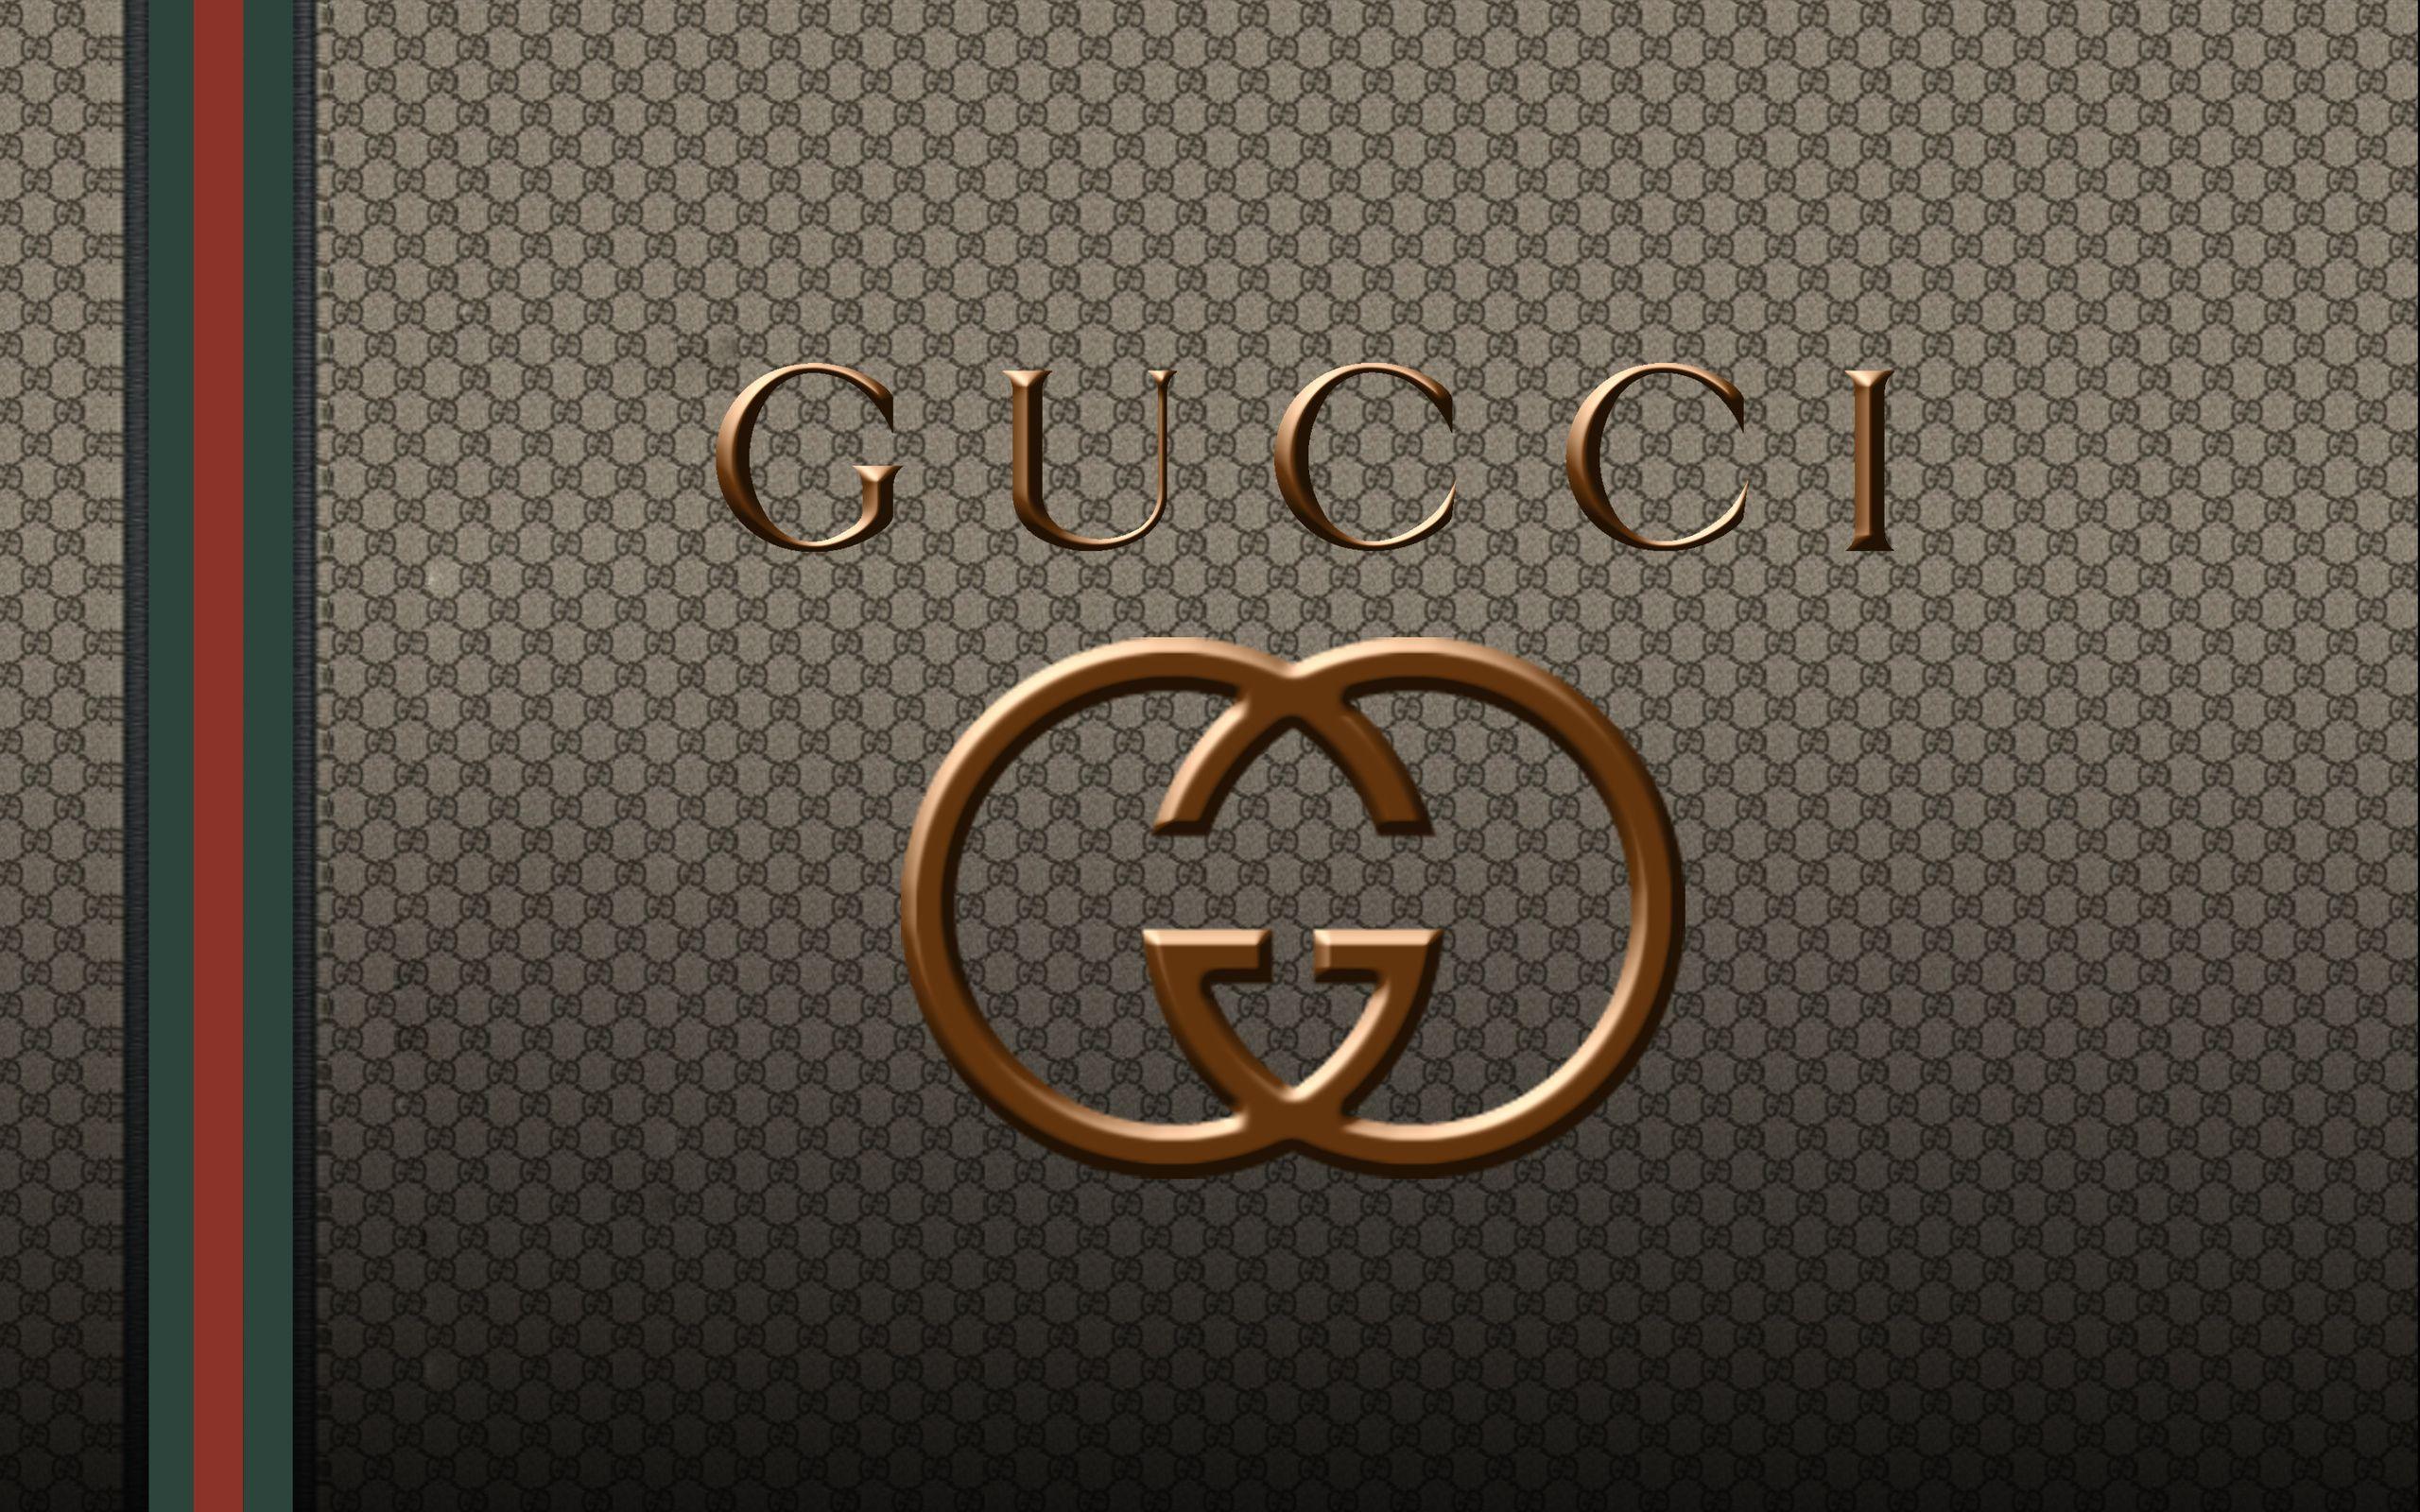 Gucci Logos Wallpapers - Wallpaper Cave